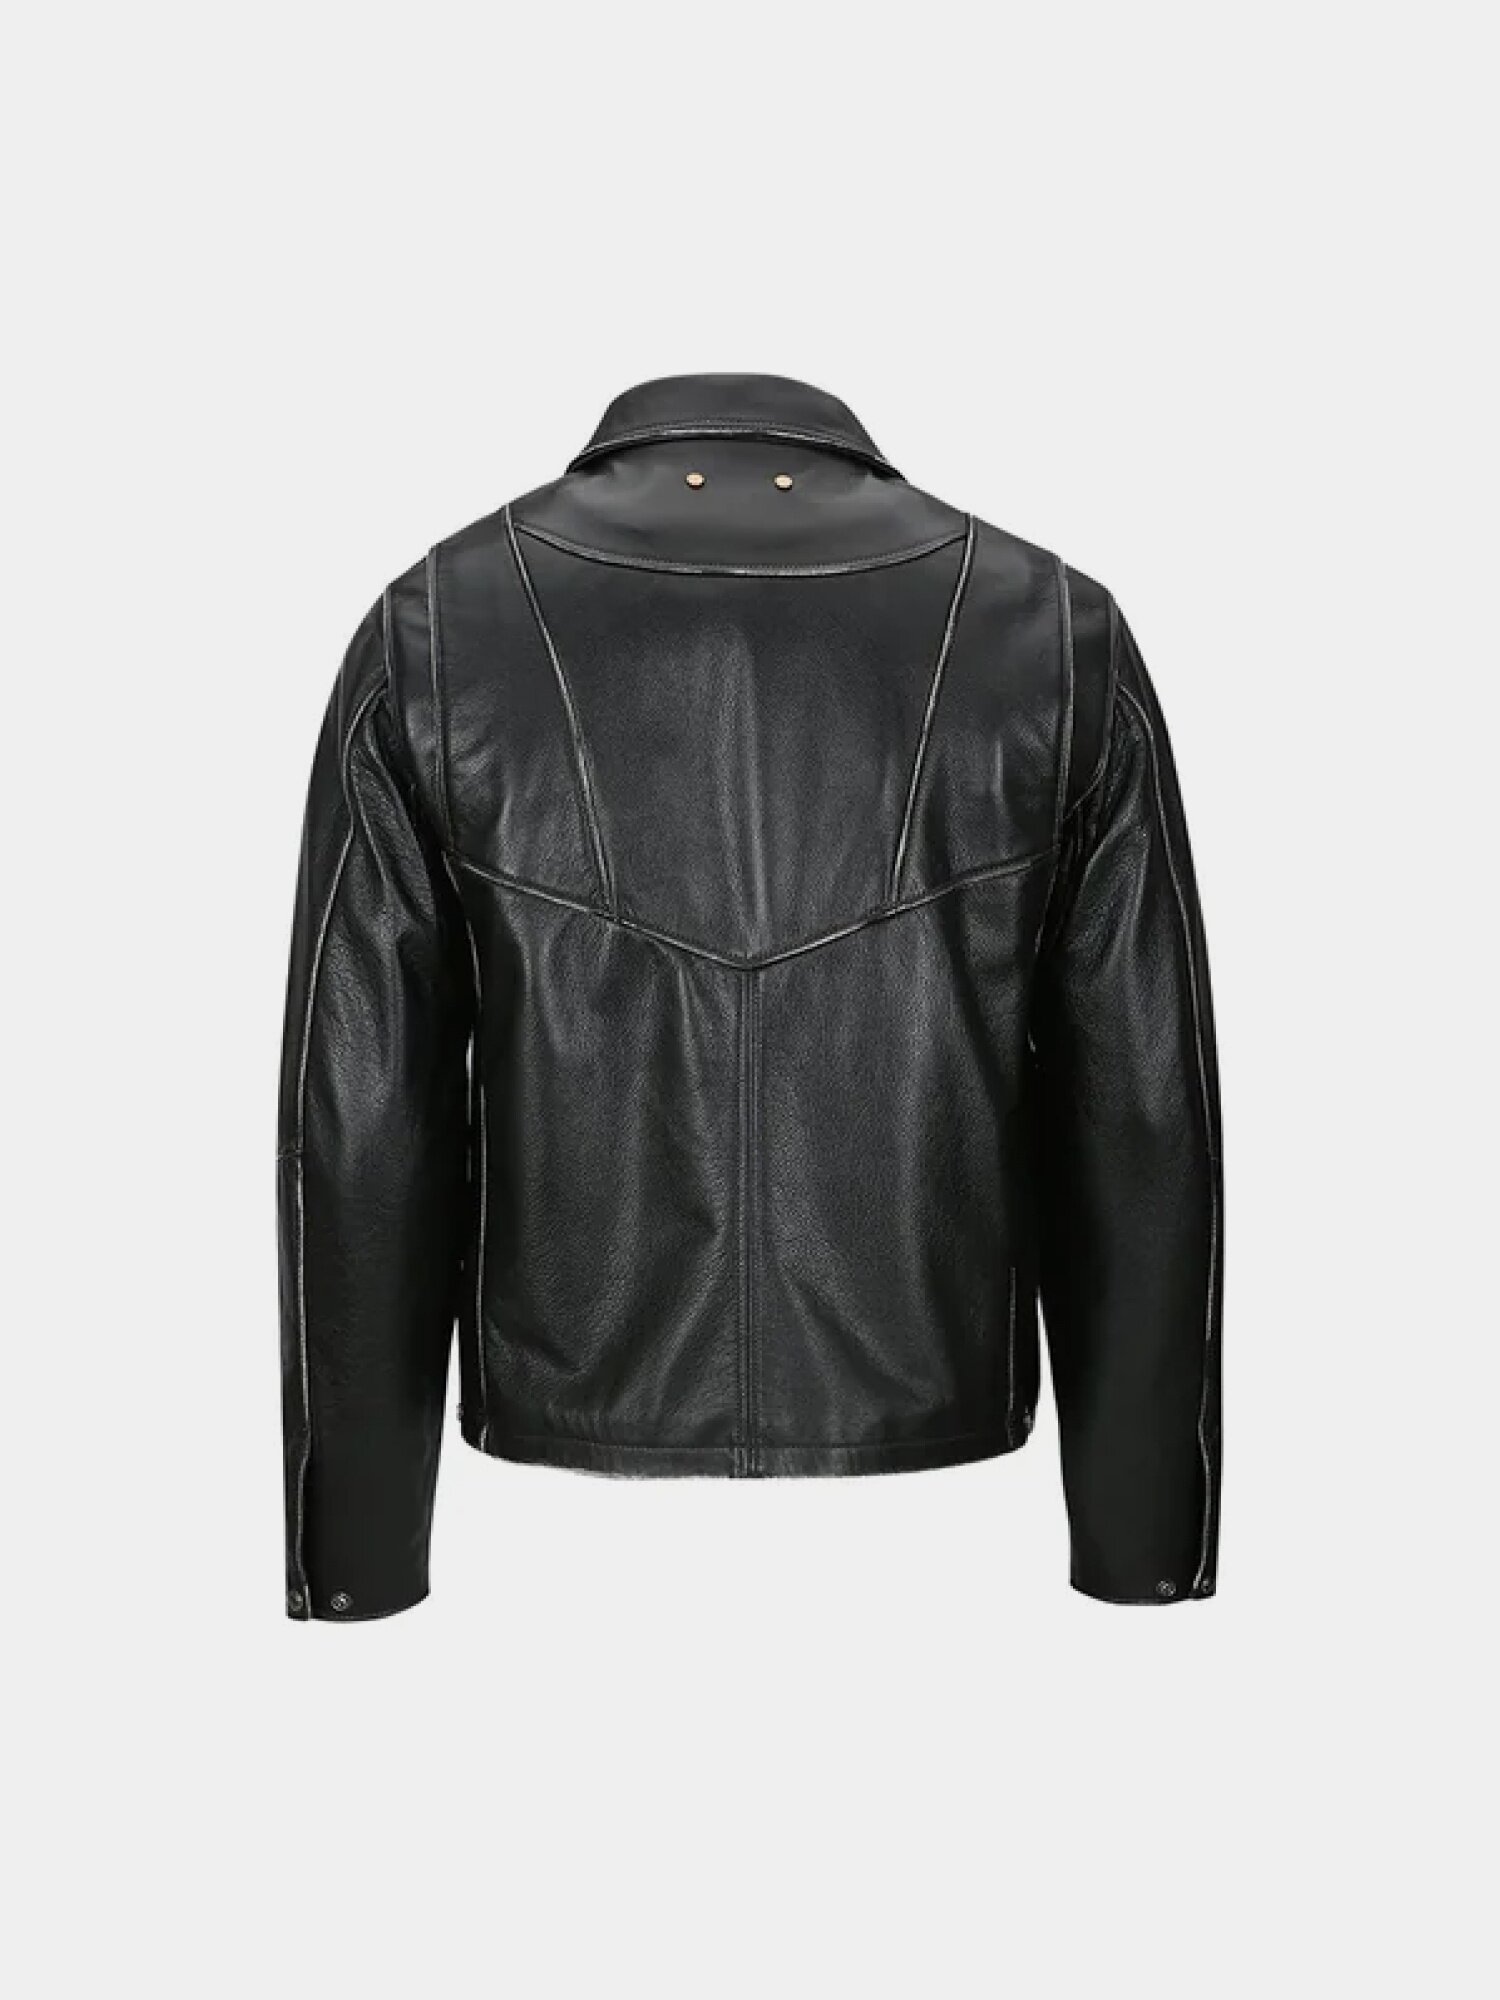 Кожаная куртка Andersson Bell Dreszen Leather